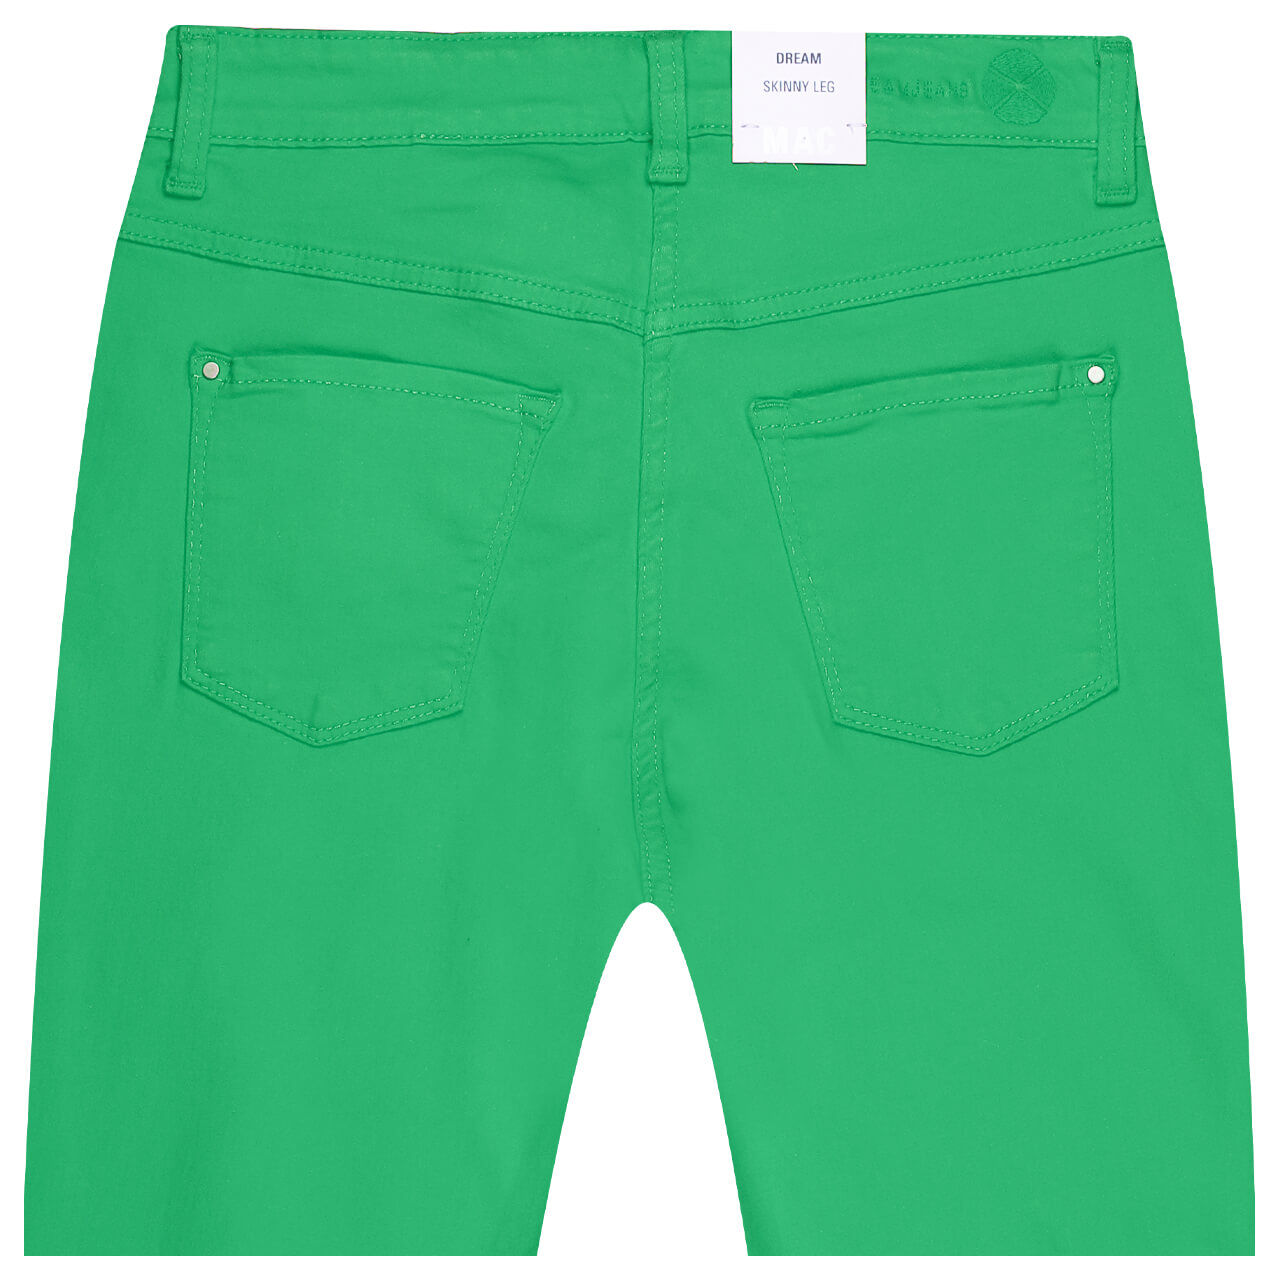 MAC Dream Skinny Jeans bright green